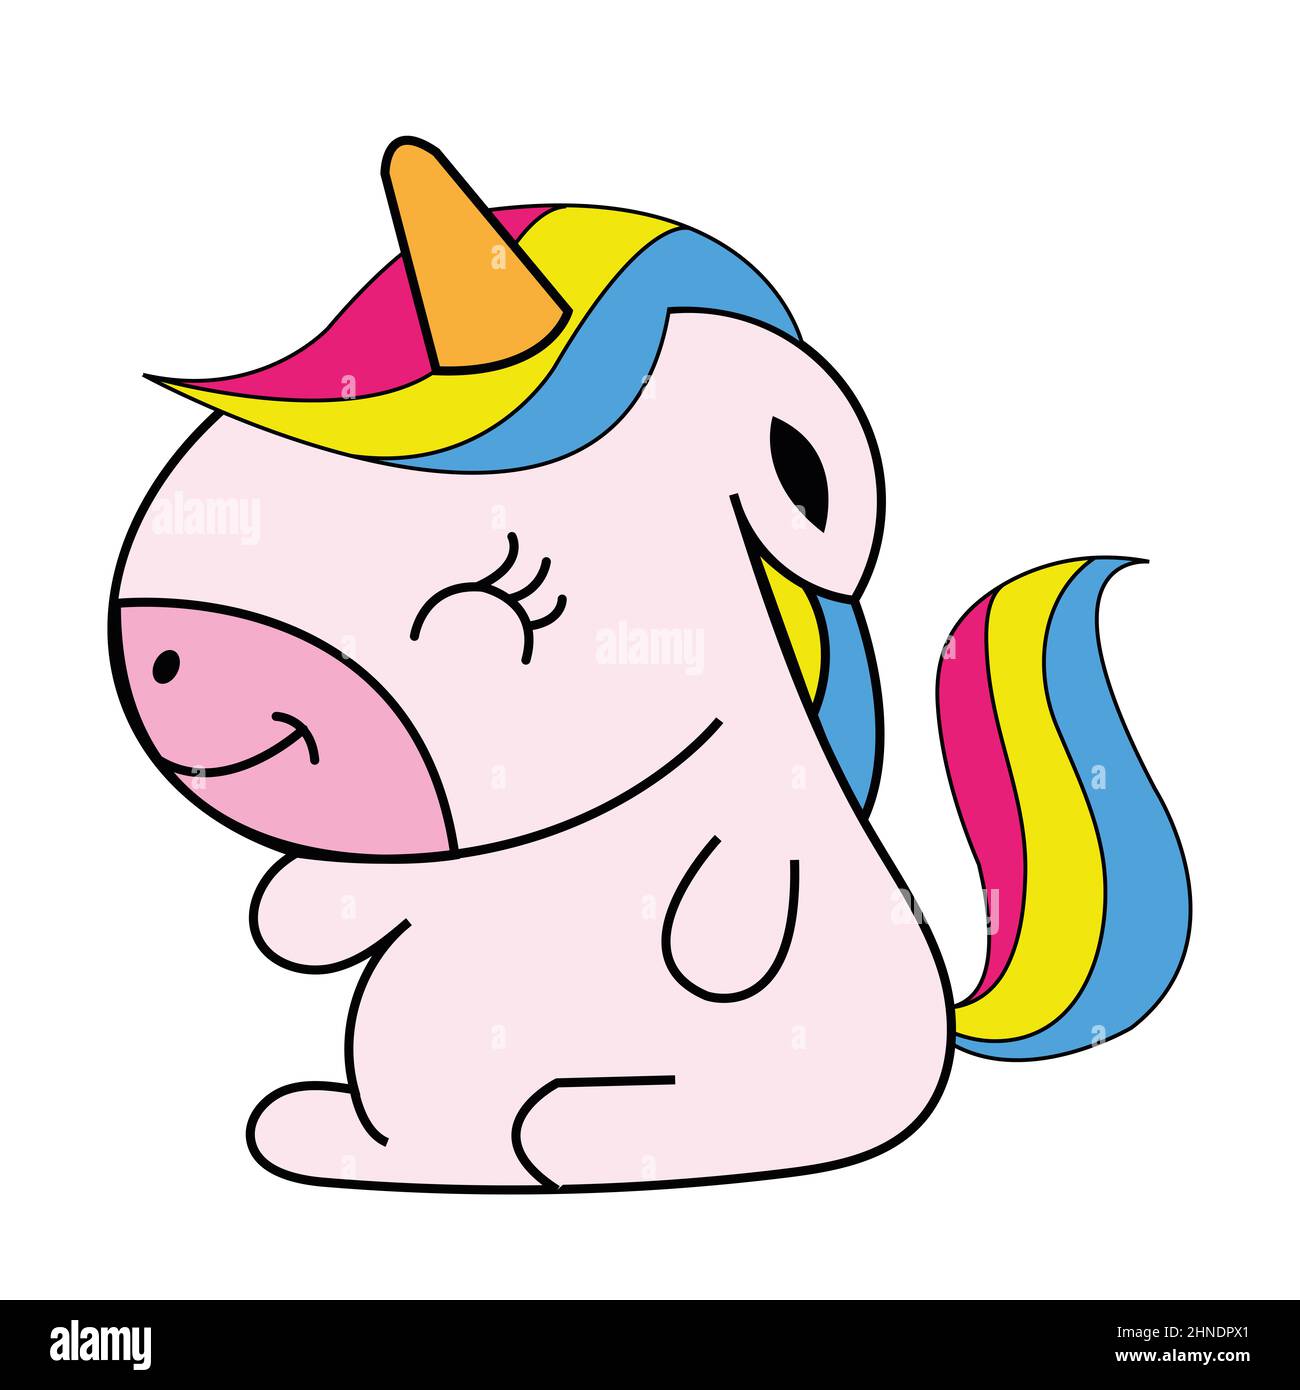 Cute unicorn clip art illustration. unicorn magic image Stock Photo - Alamy